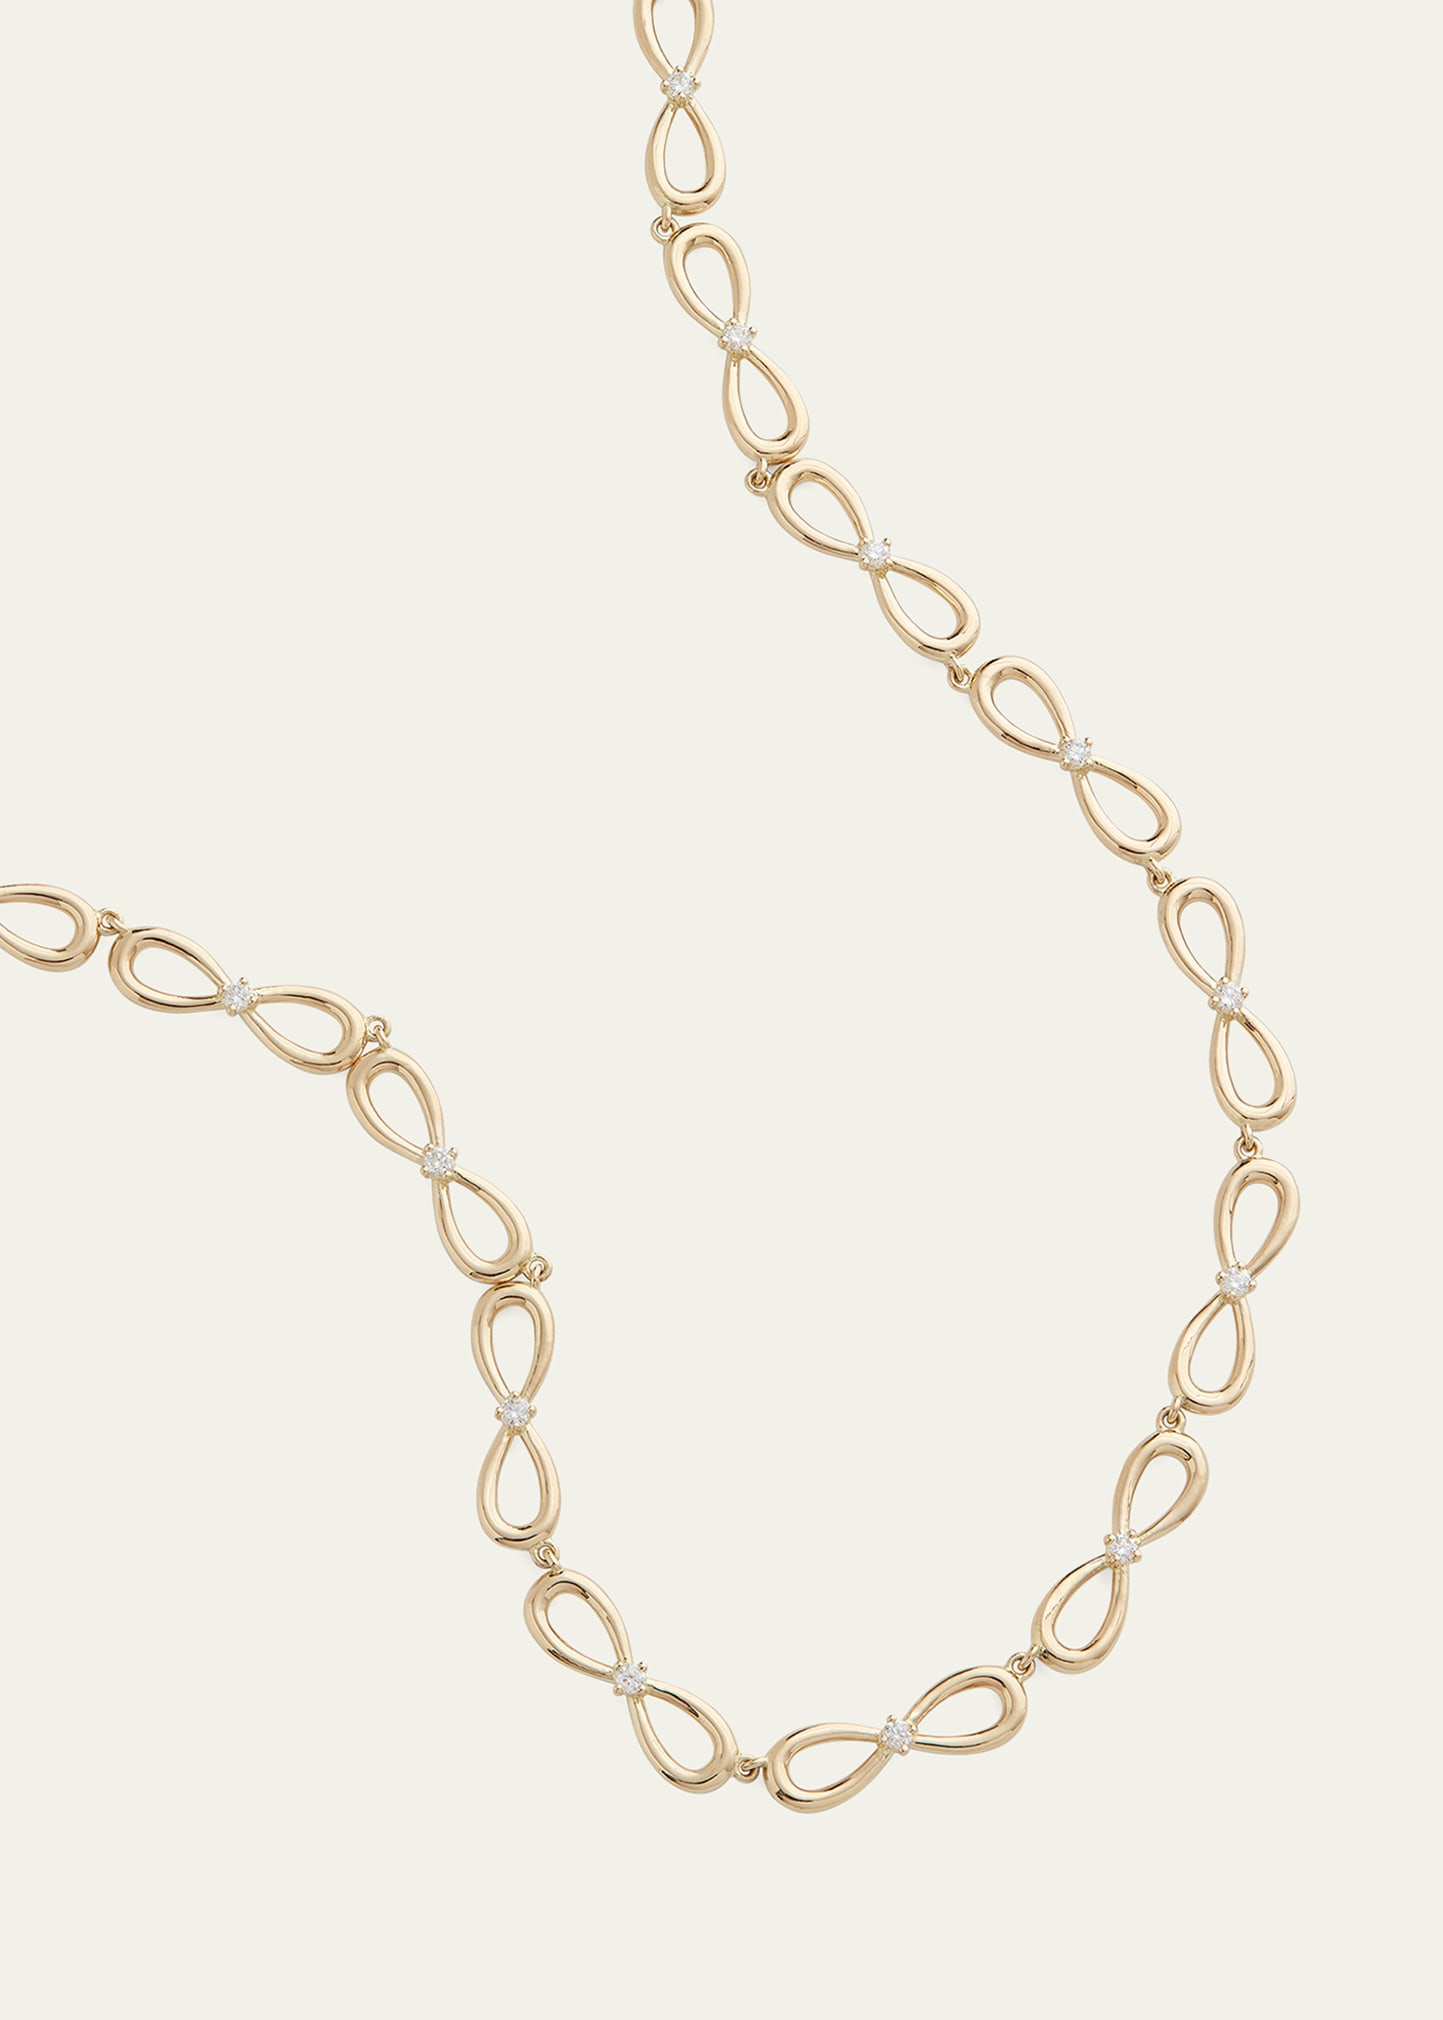 Jamie Wolf 18k Yellow Gold Hourglass Necklace with Diamonds